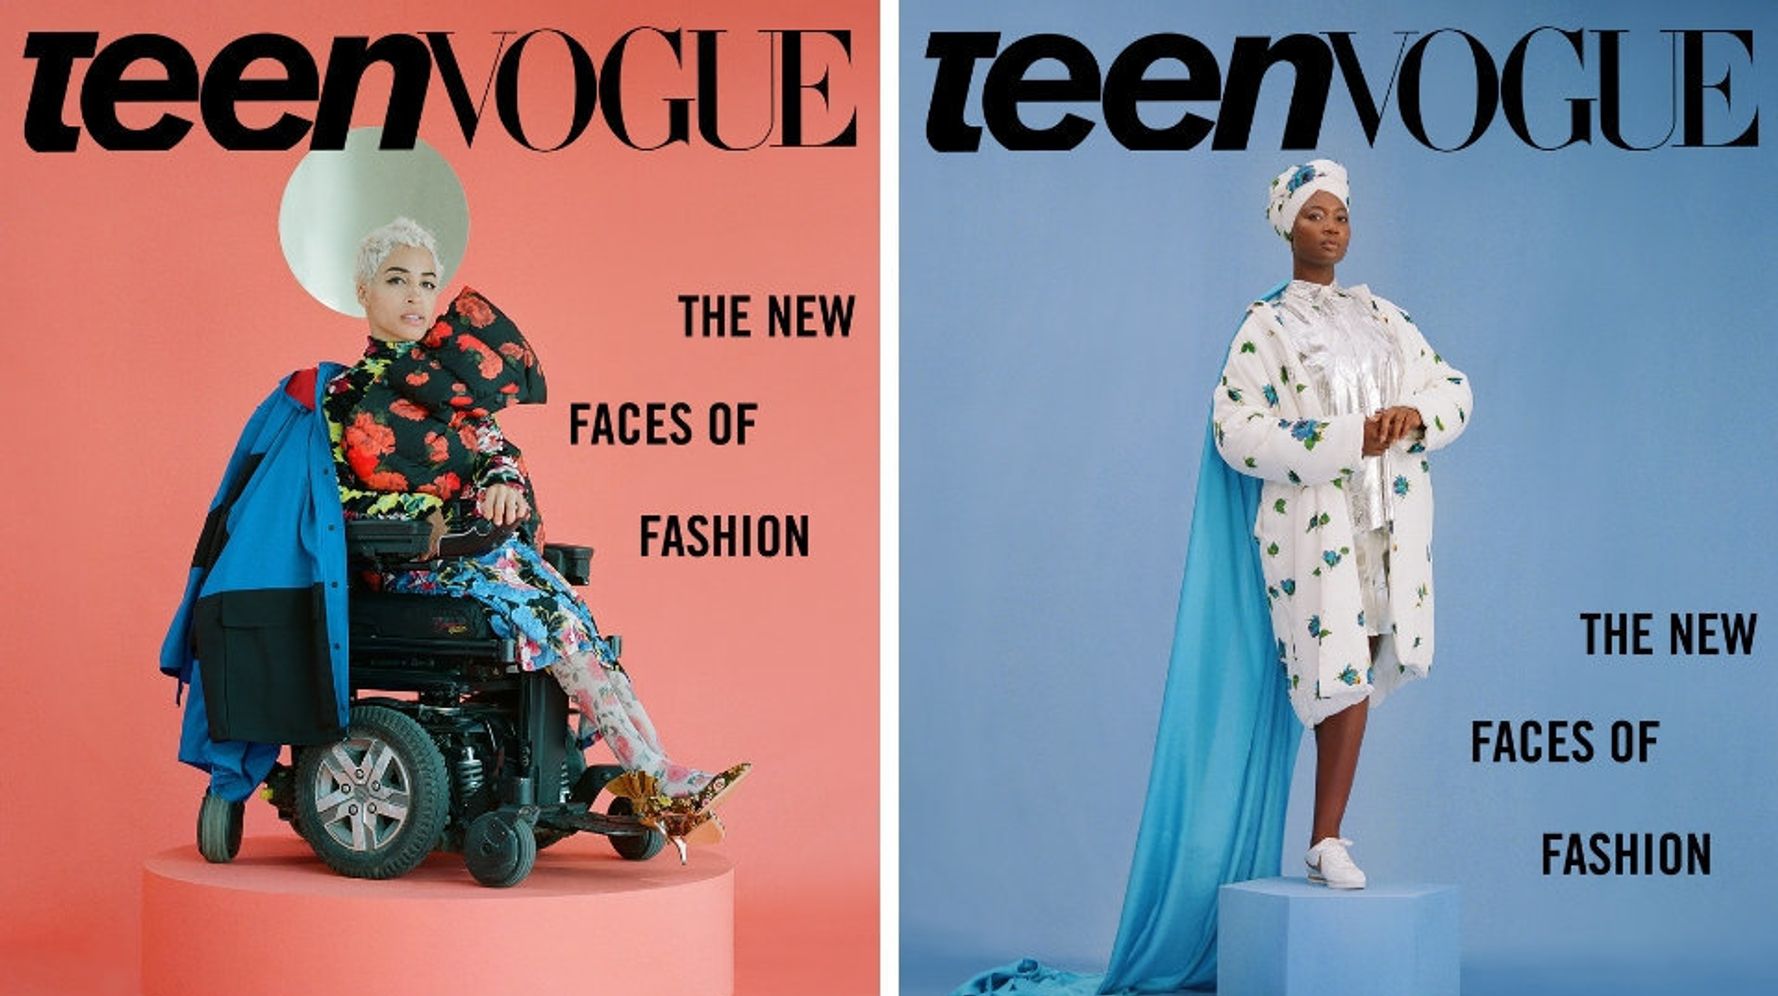 Intergenerational Examination of Vogue Fashion Advertisement